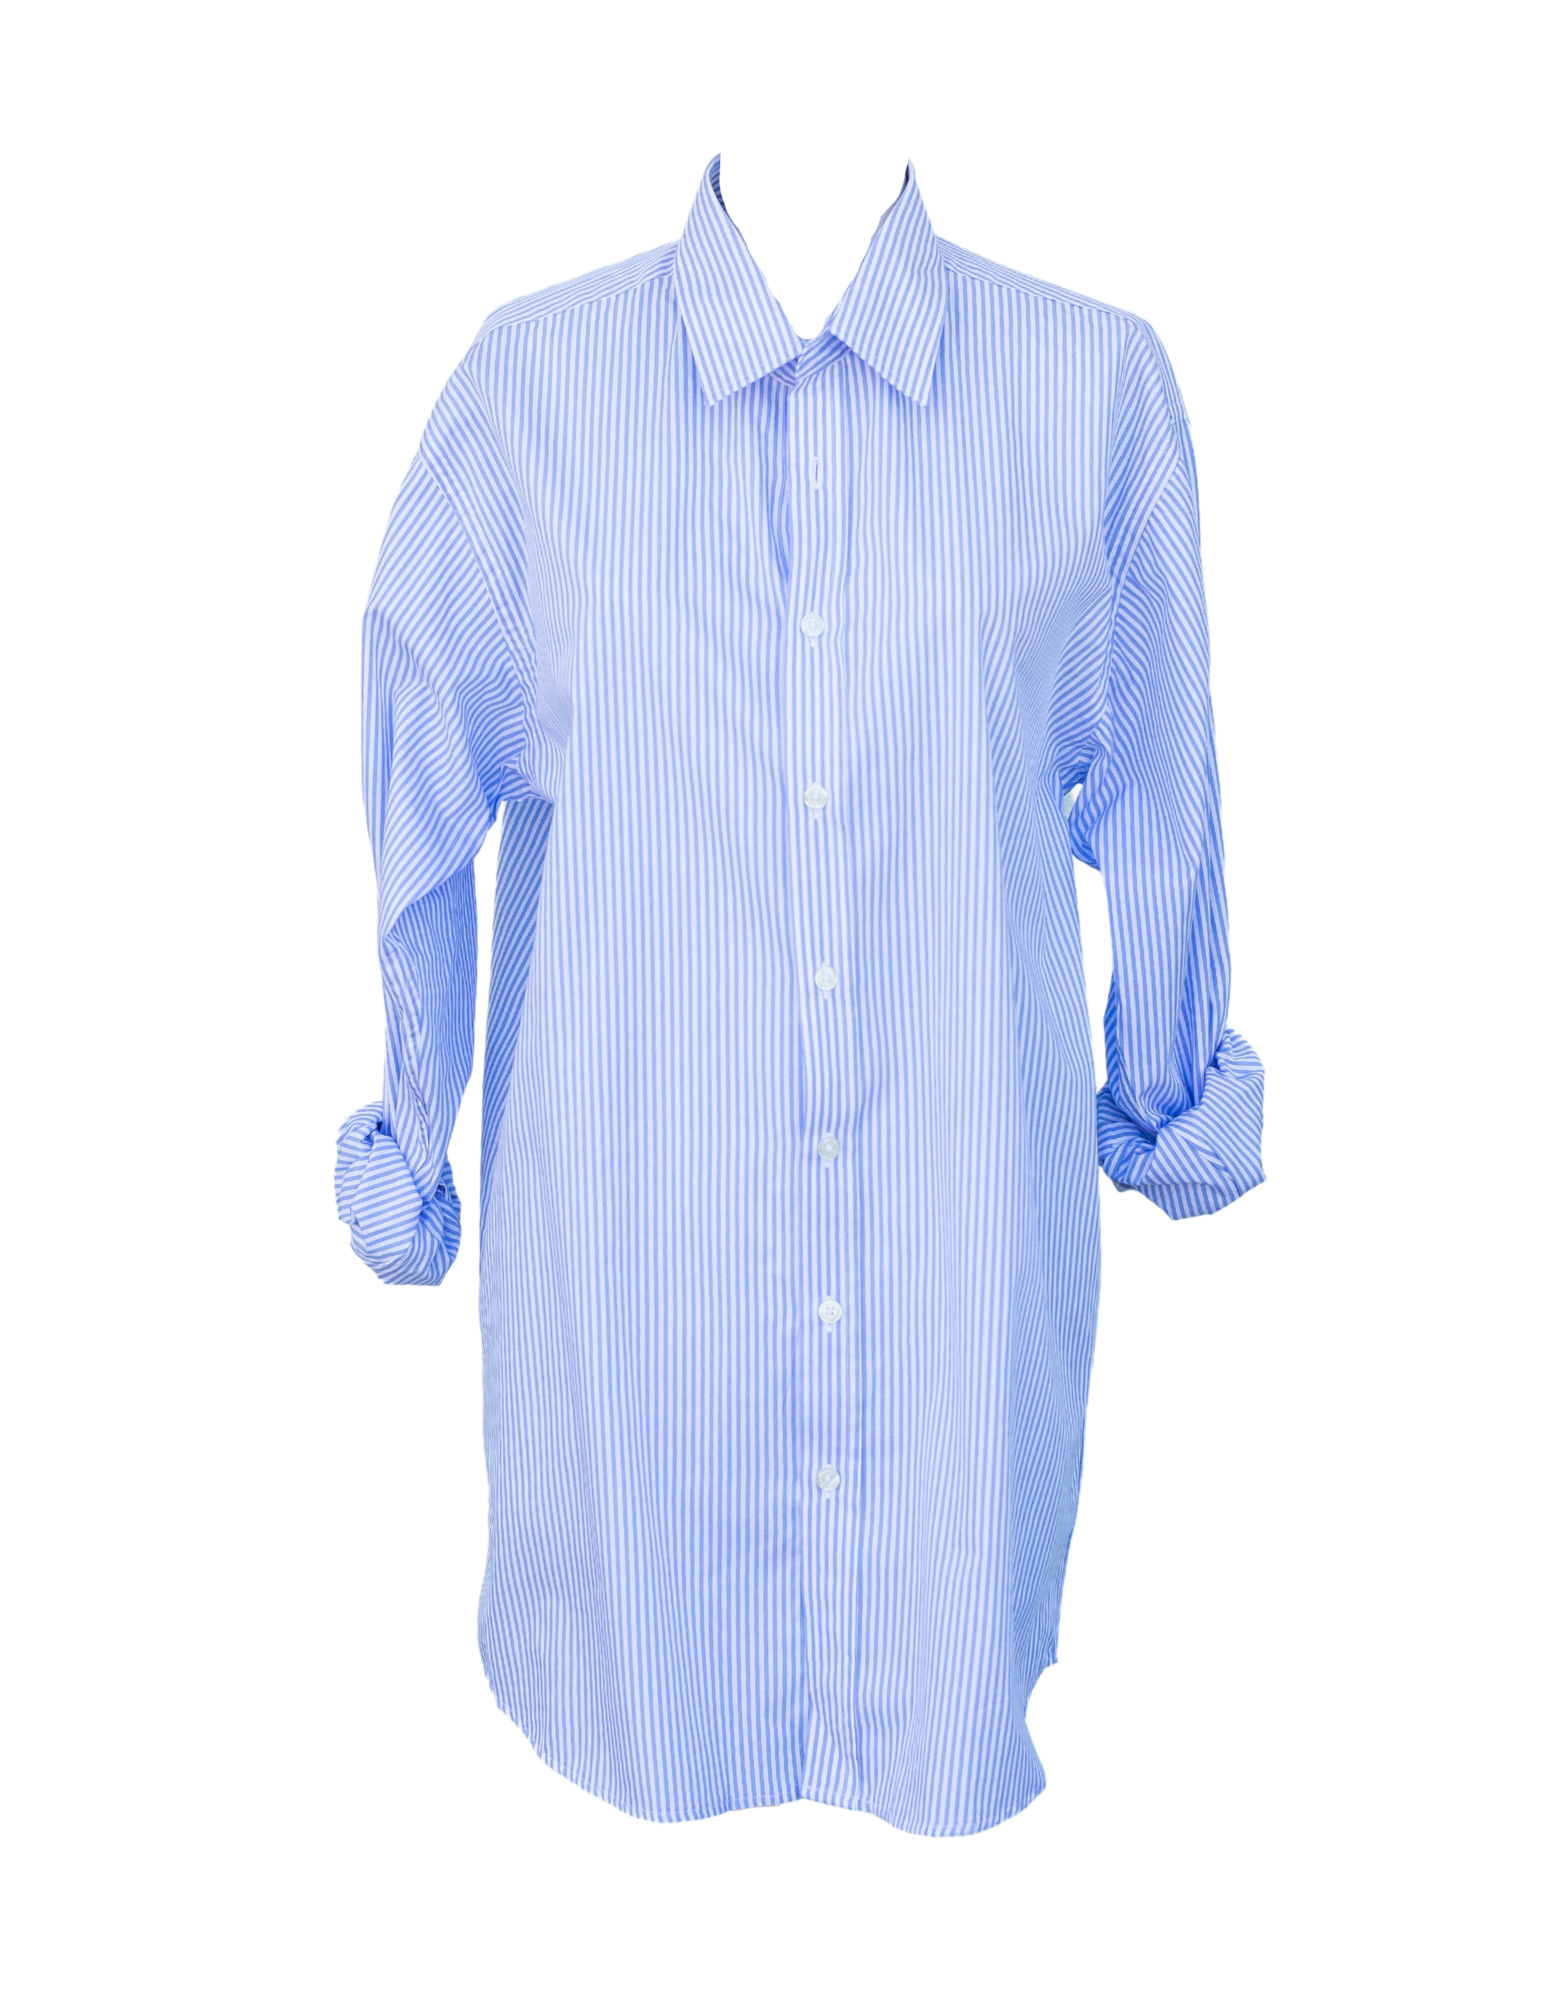 Oversized Shirt w/ No Pocket - Striped Baby Blue